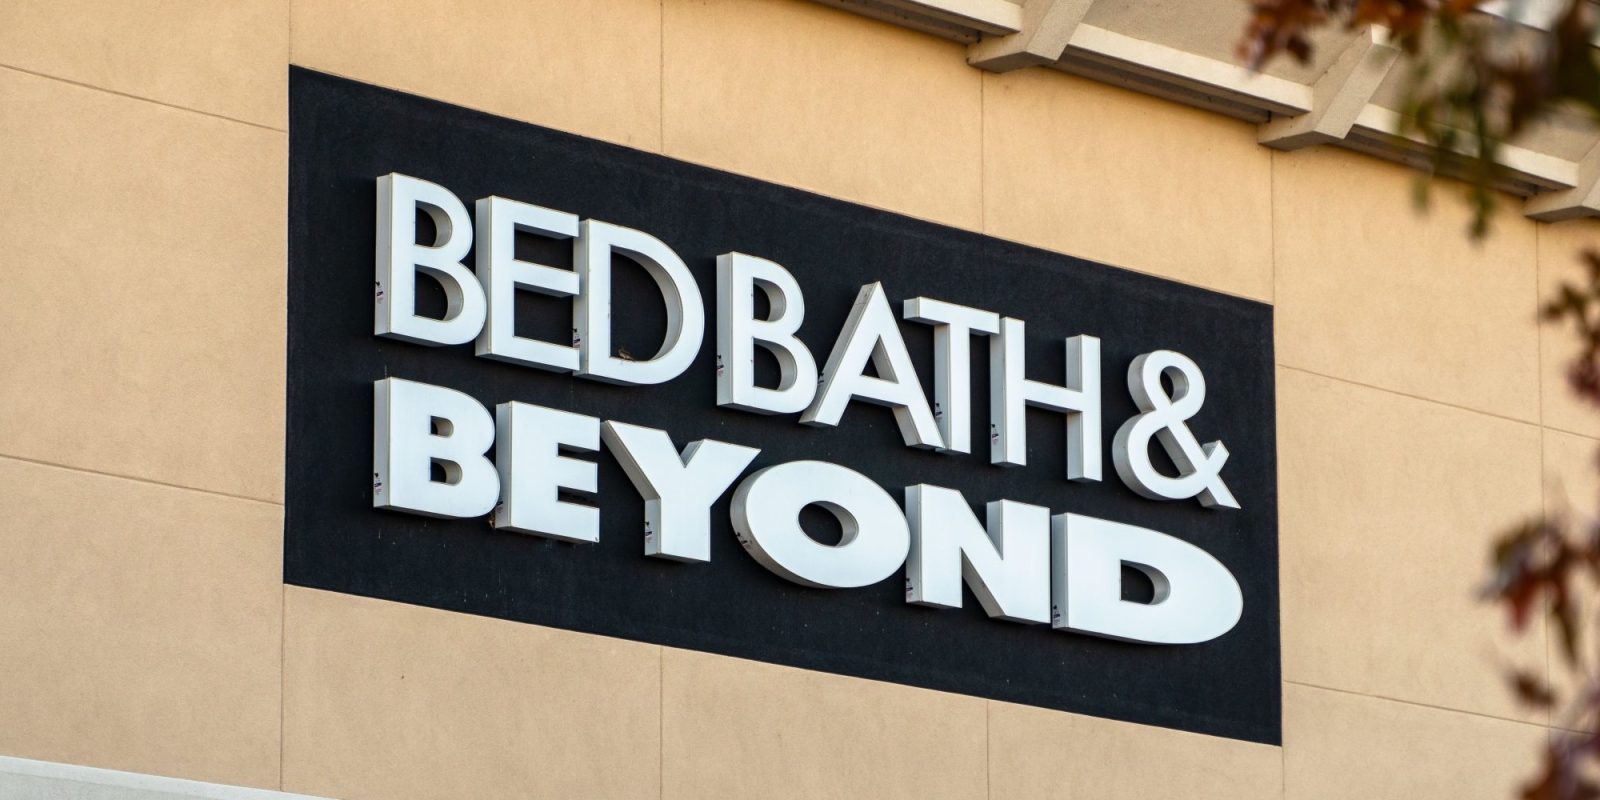 bed bath beyond coupon code 2018